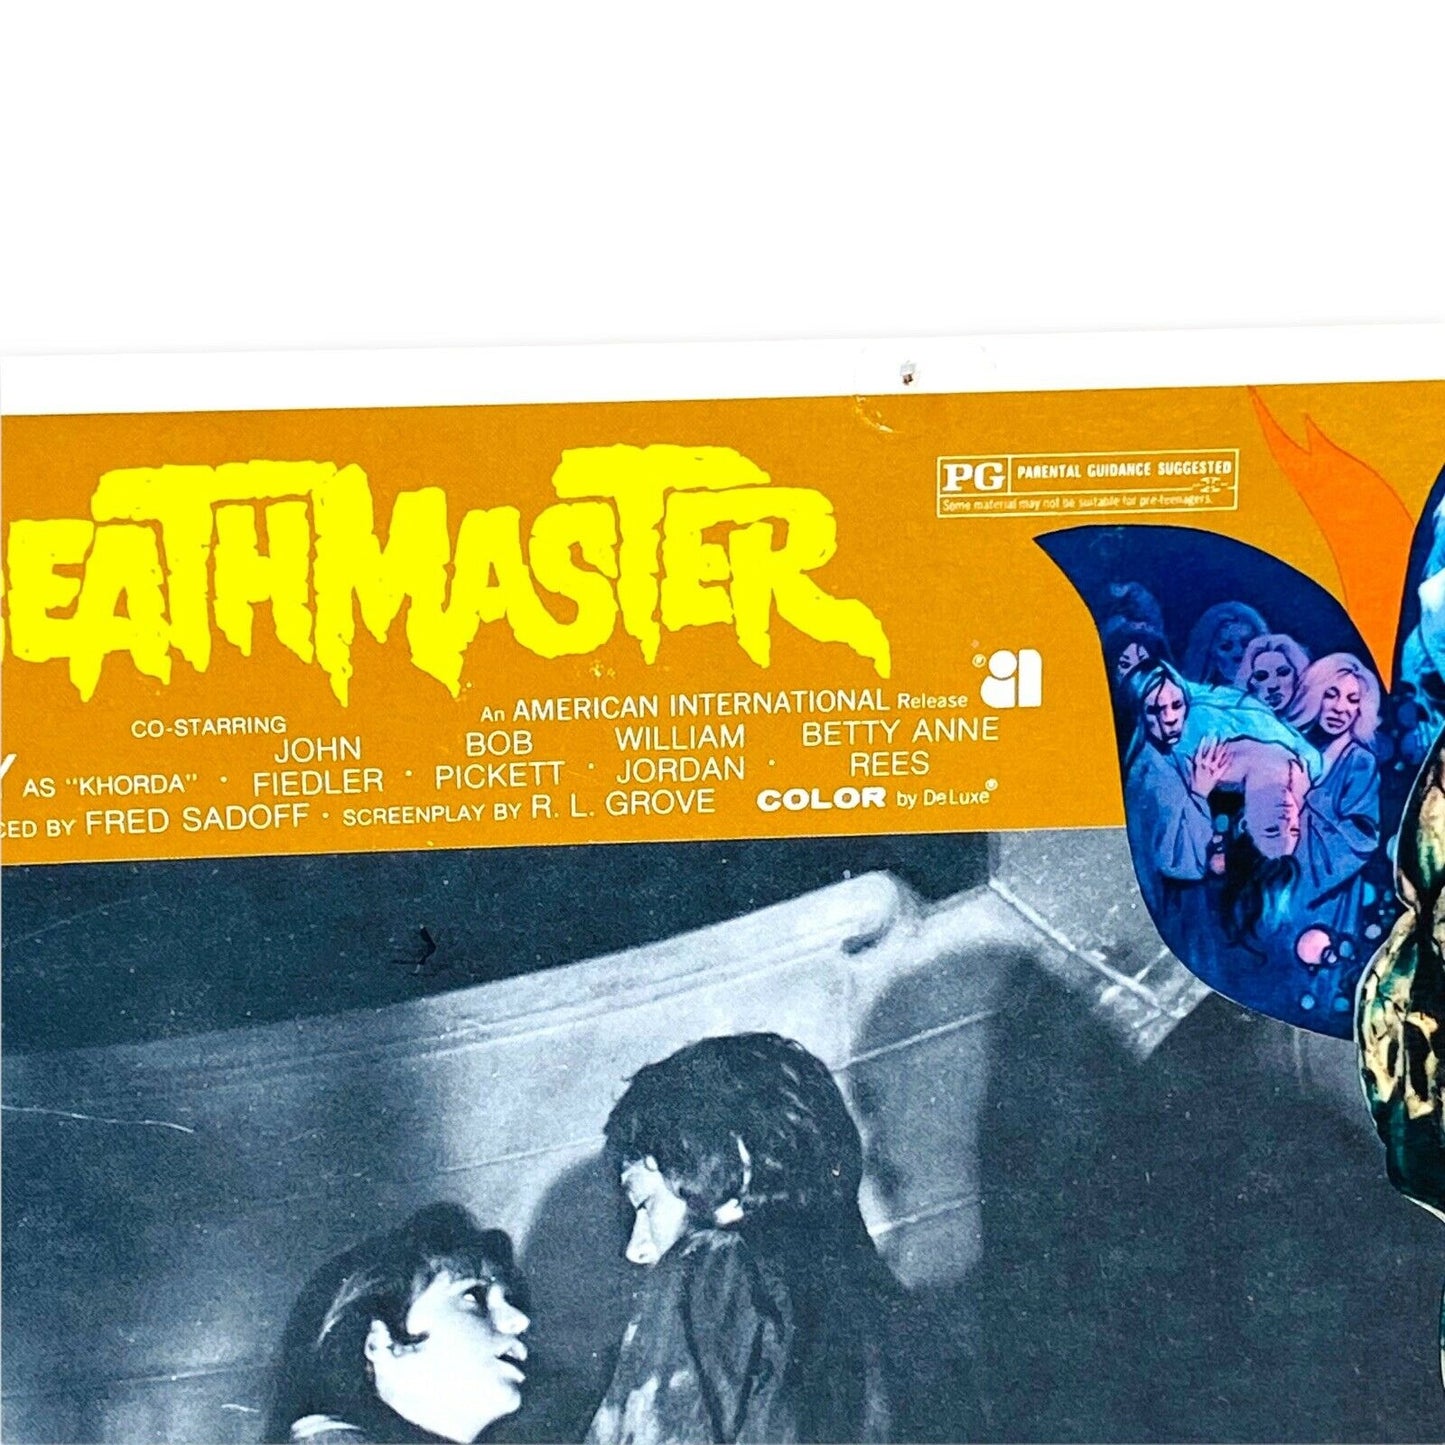 Original Lobby Card "The Deathmaster" 1972 Horror Movie Poster Card #4